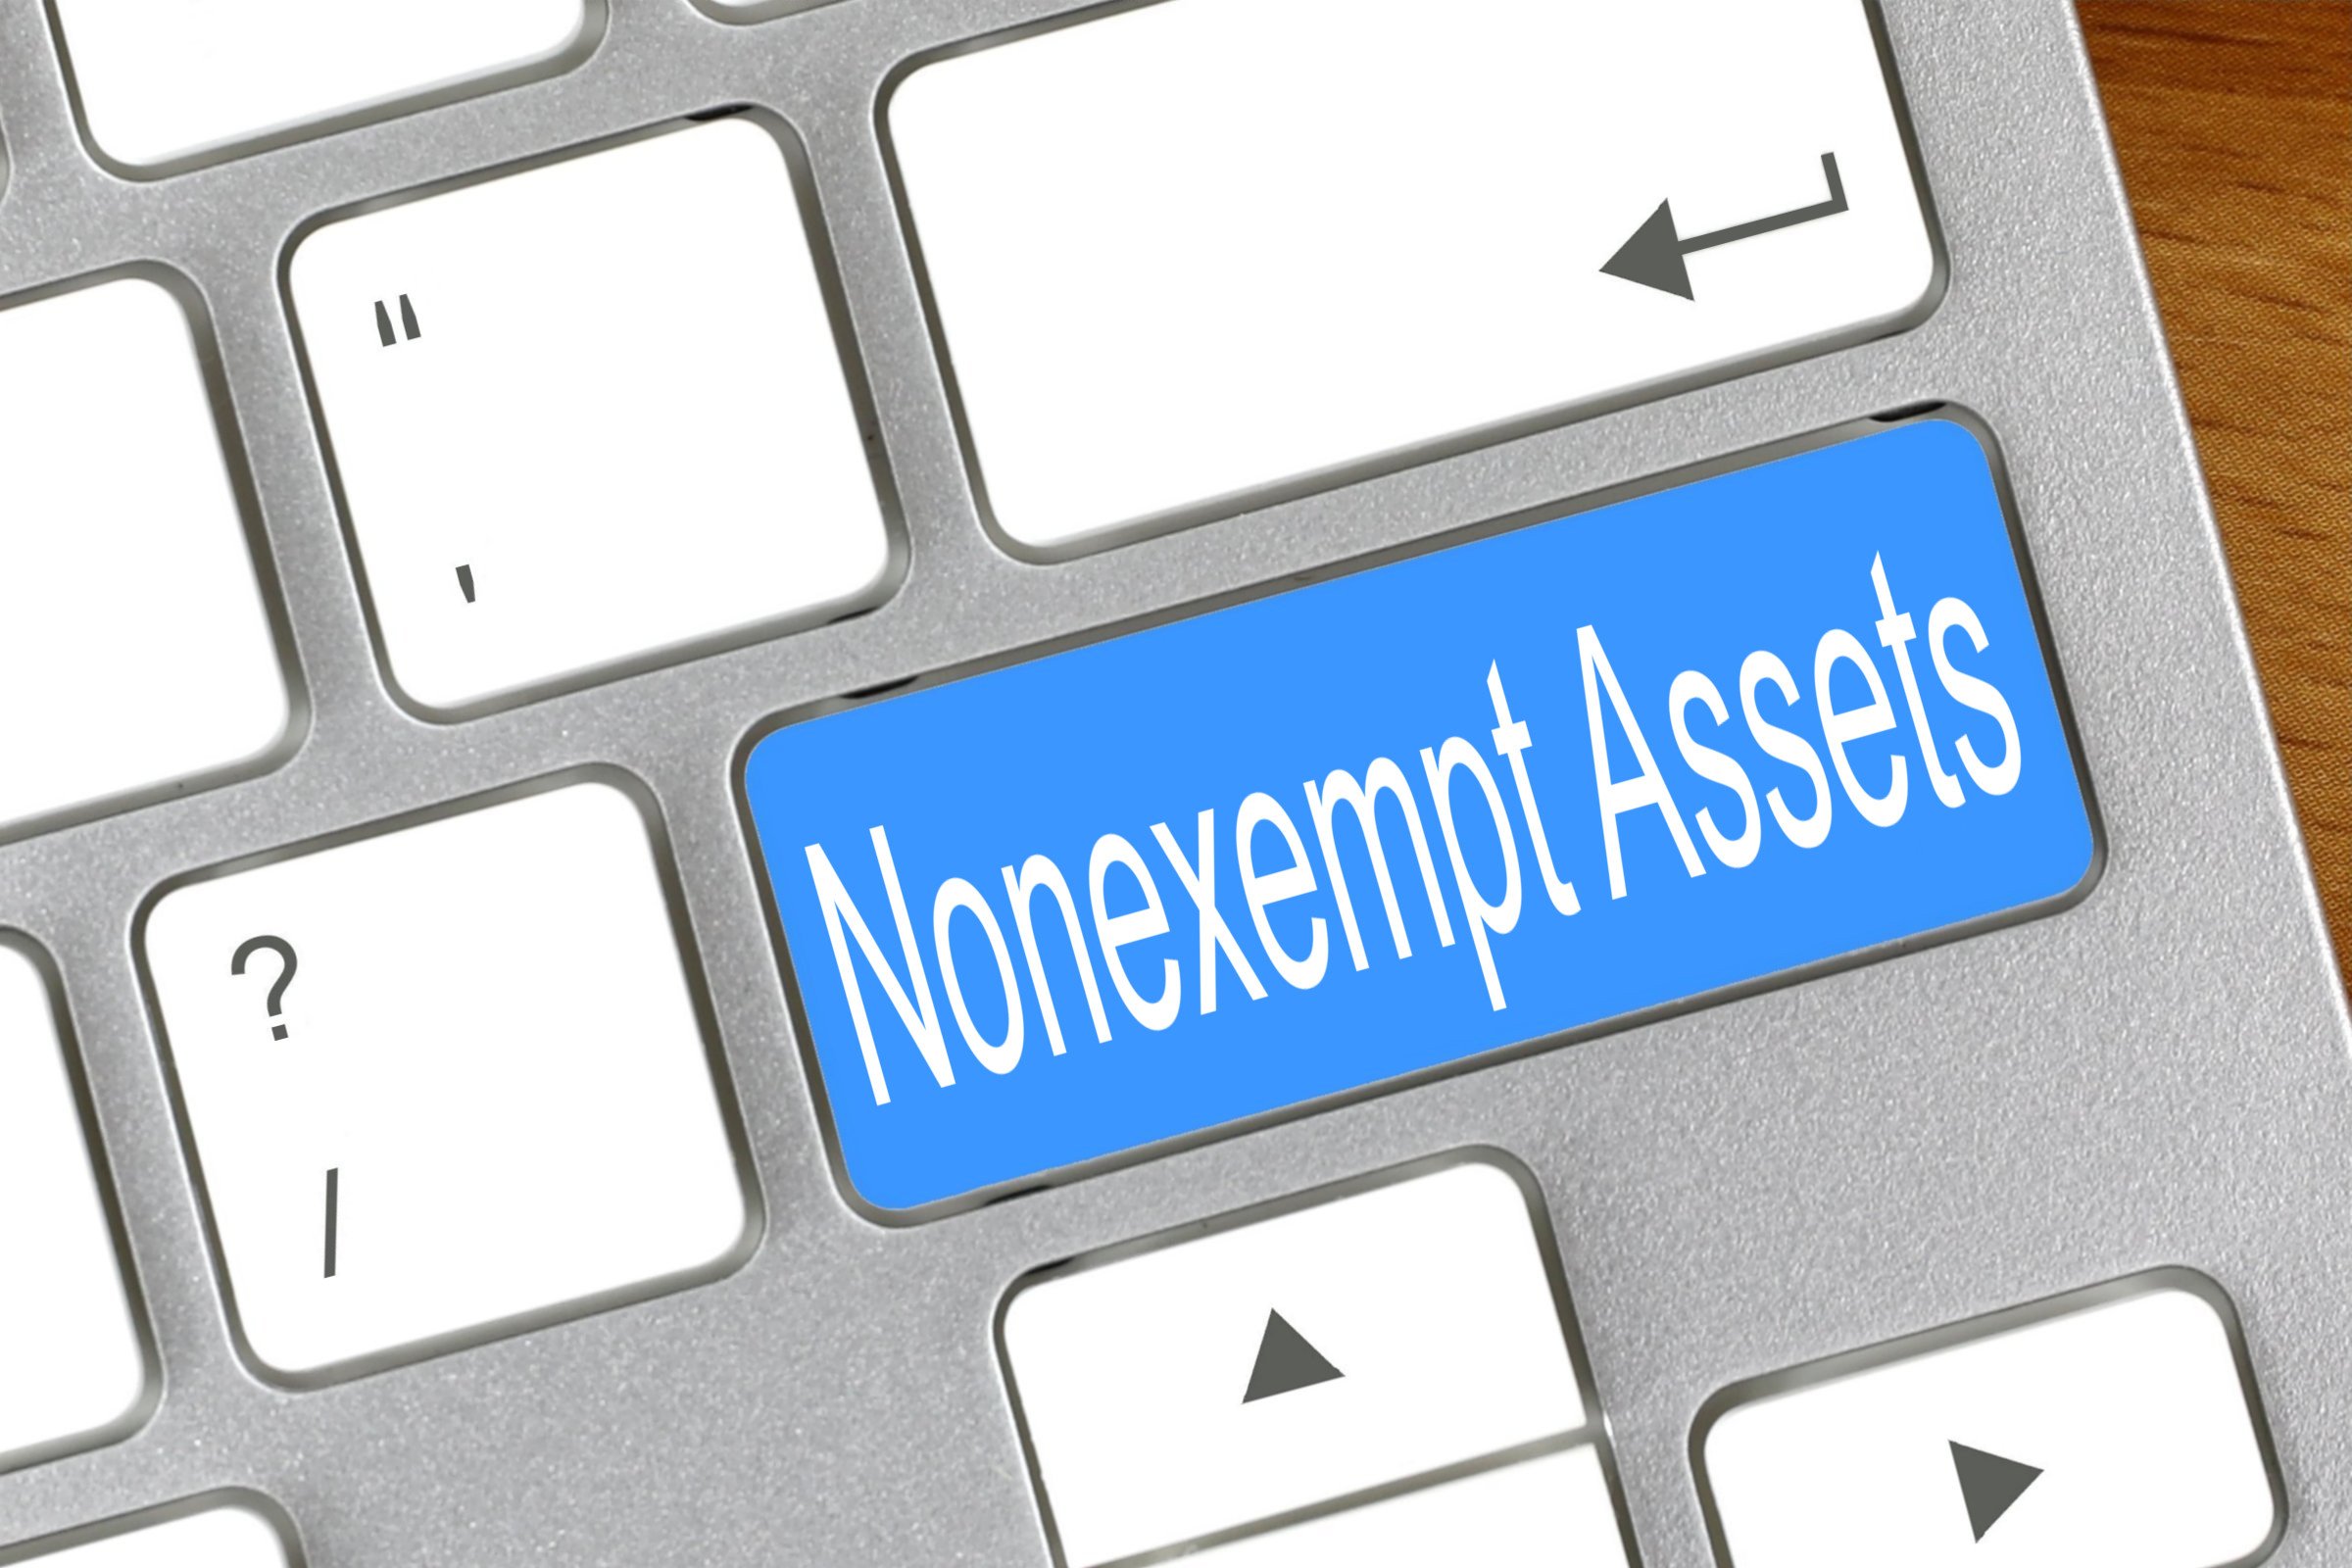 nonexempt assets